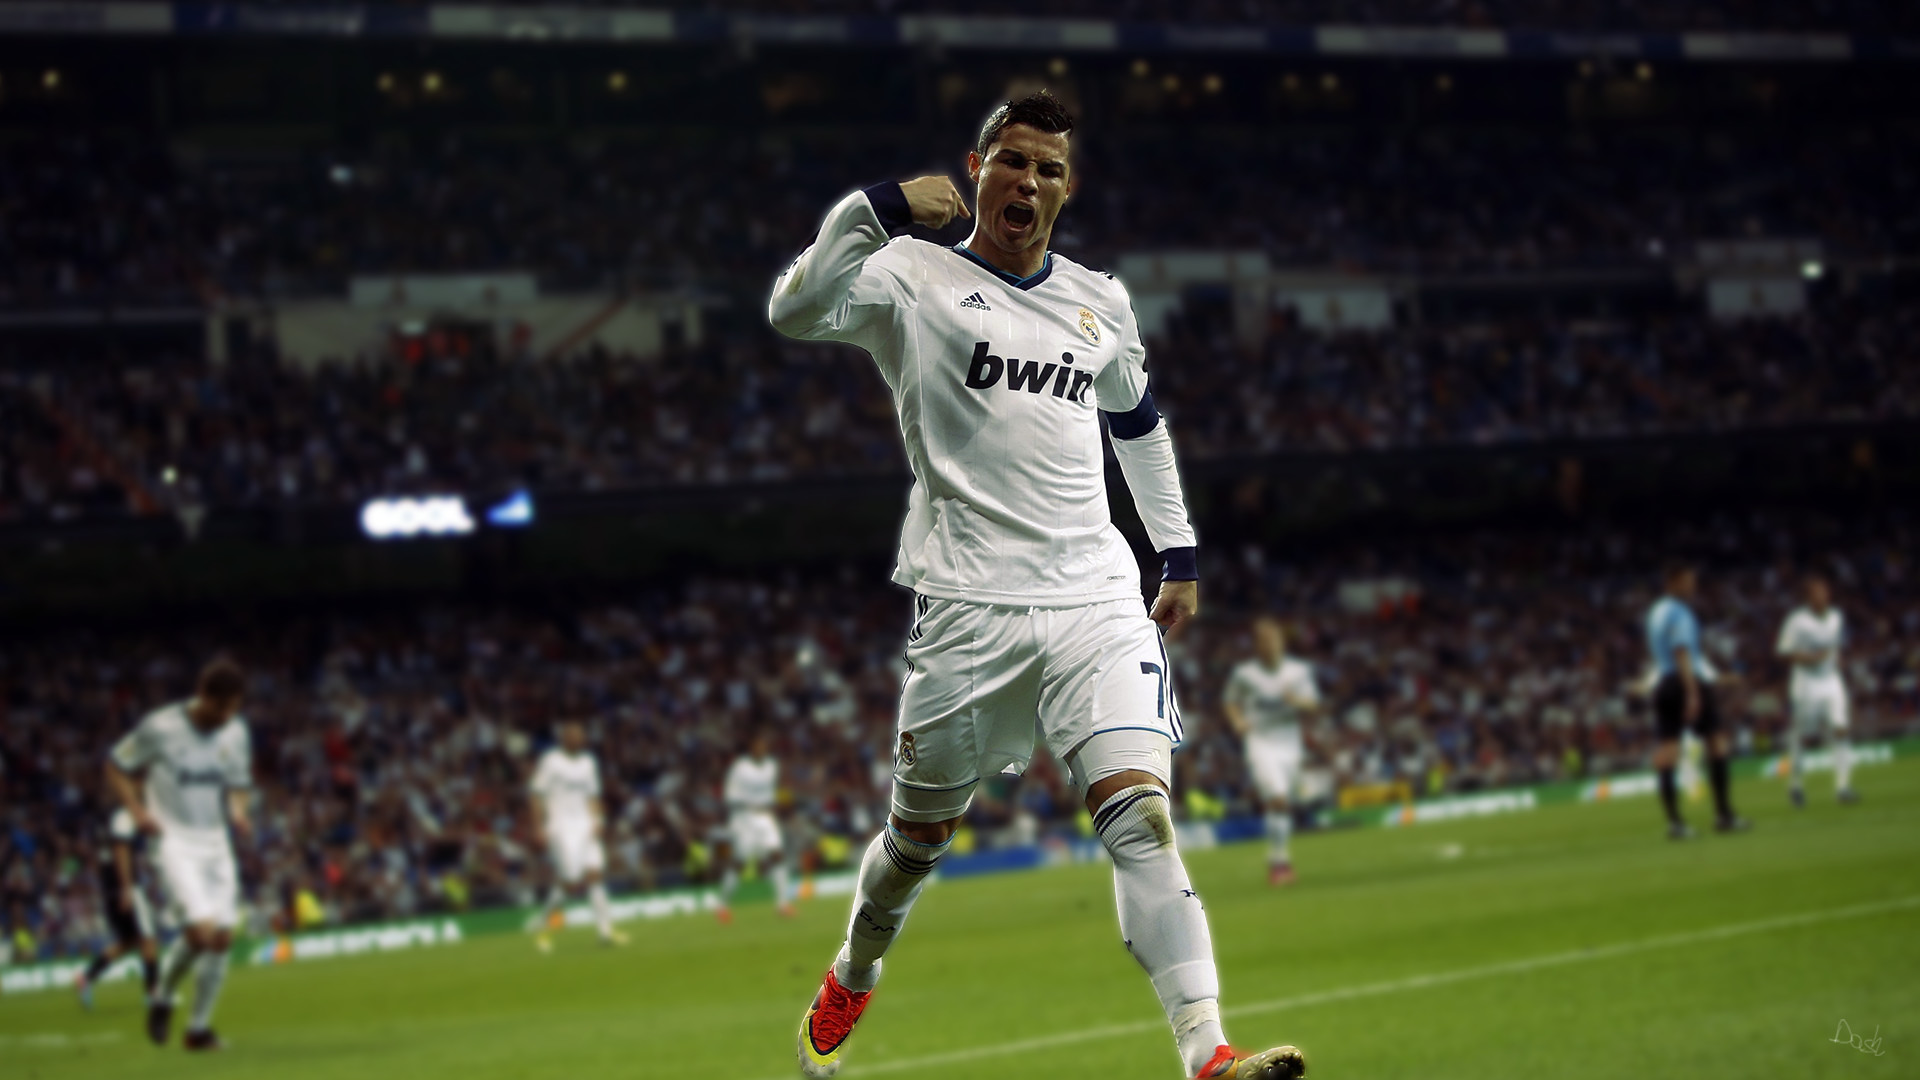 1920x1080 Download Free HD p Wallpapers of Cristiano Ronaldo